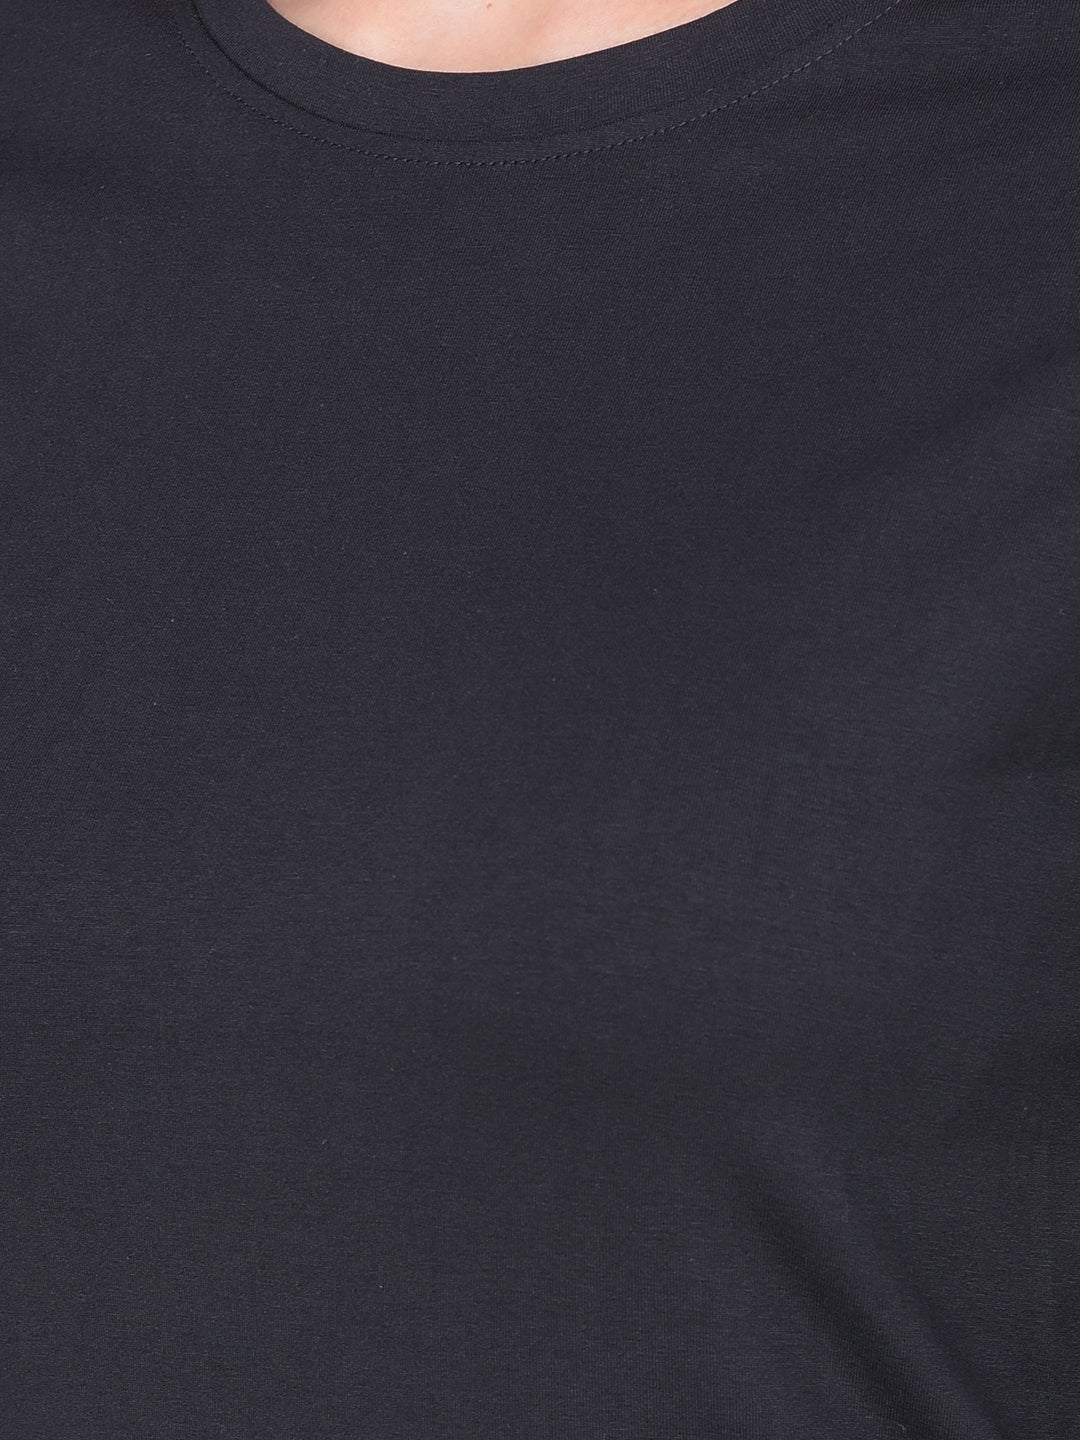 Comfort Lady Regular Fit Round Neck Plain Full Sleeve T-Shirt pack of 2